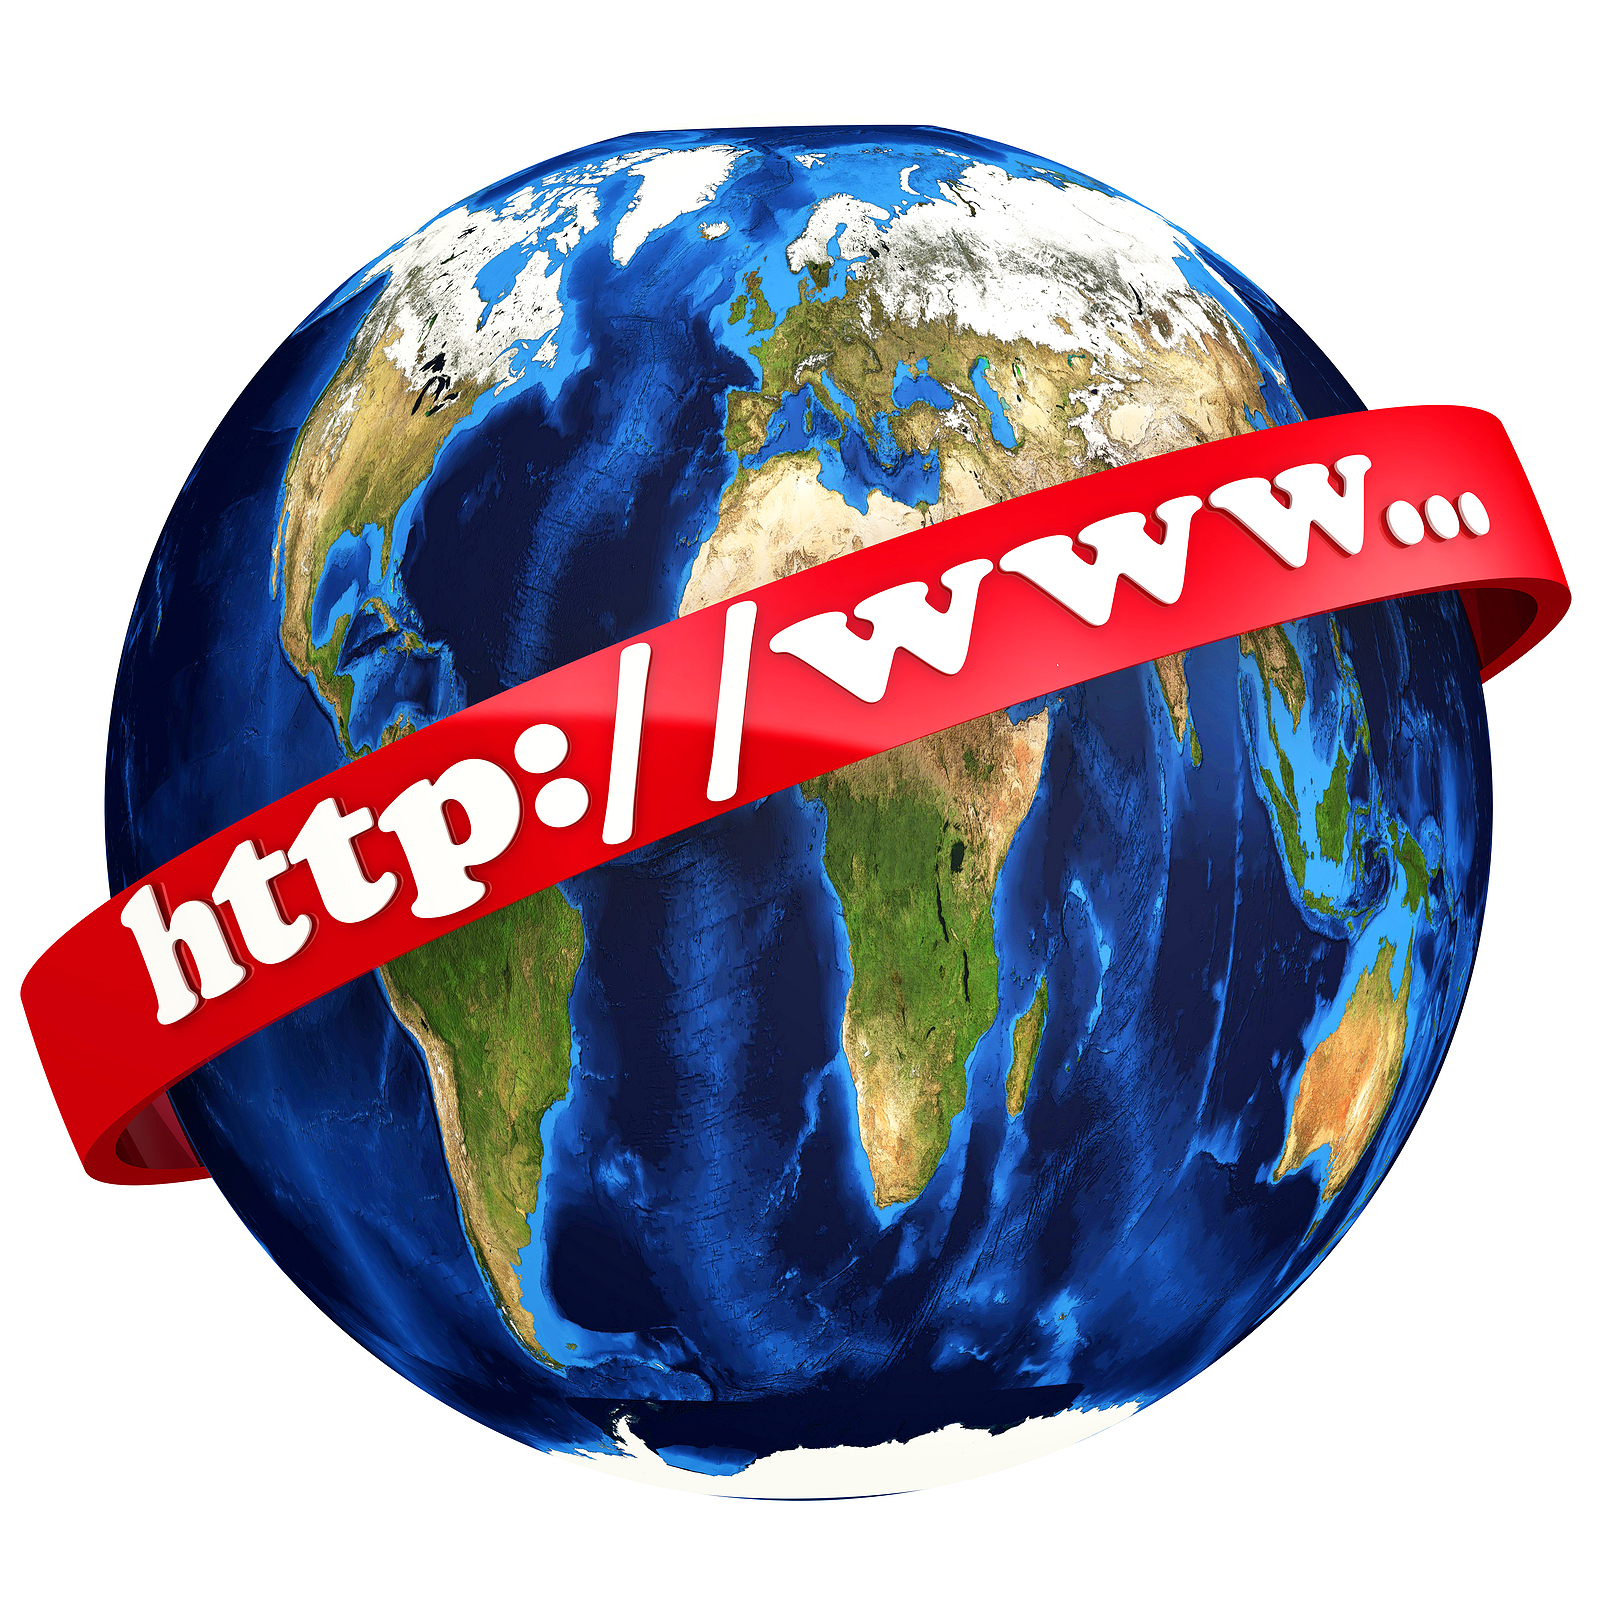 bigstock-World-Wide-Web-Icon-Red-Ribbo-415150330.jpg